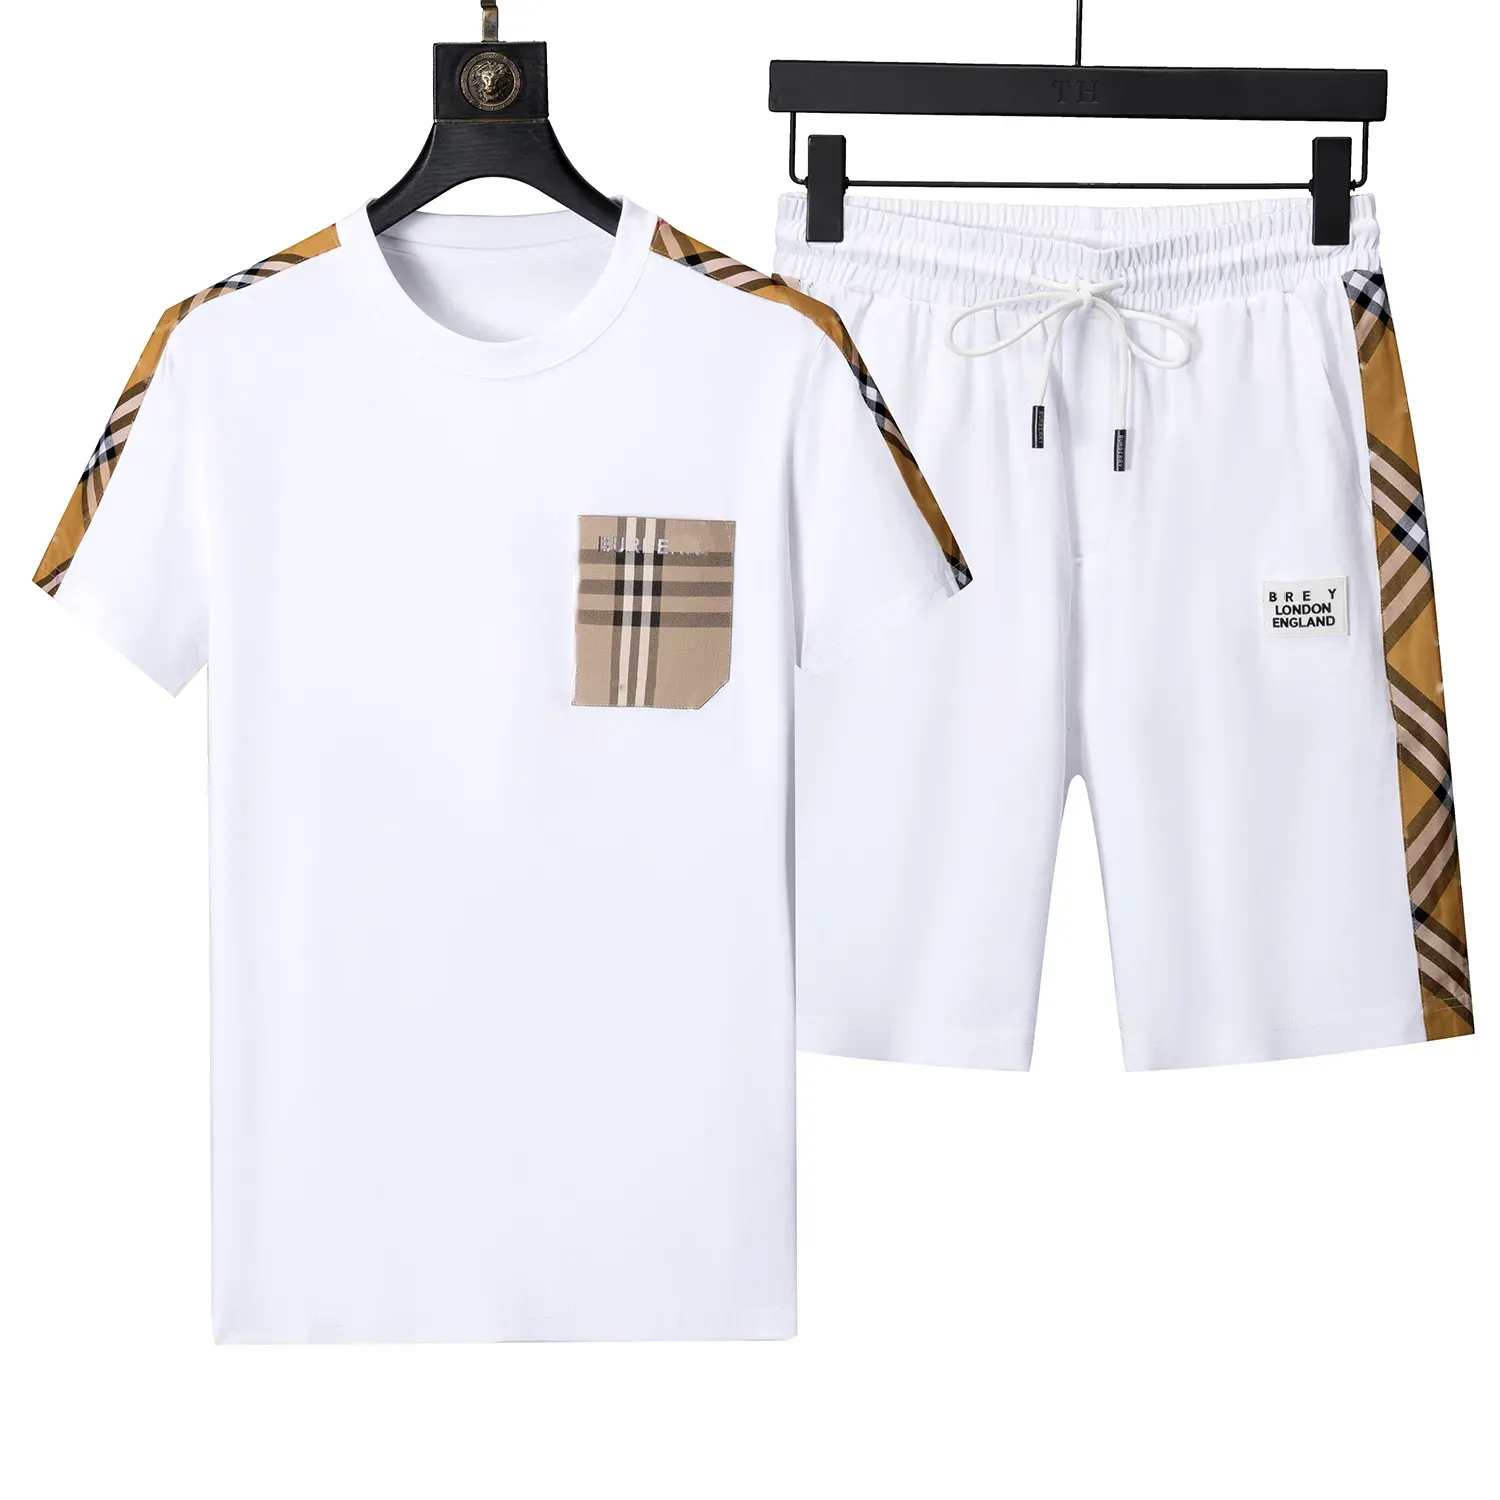 T-shirt T-shirt masculin à manches courtes à manches courtes CHENILLE Sportswear Black Cotton London Street M-3XL